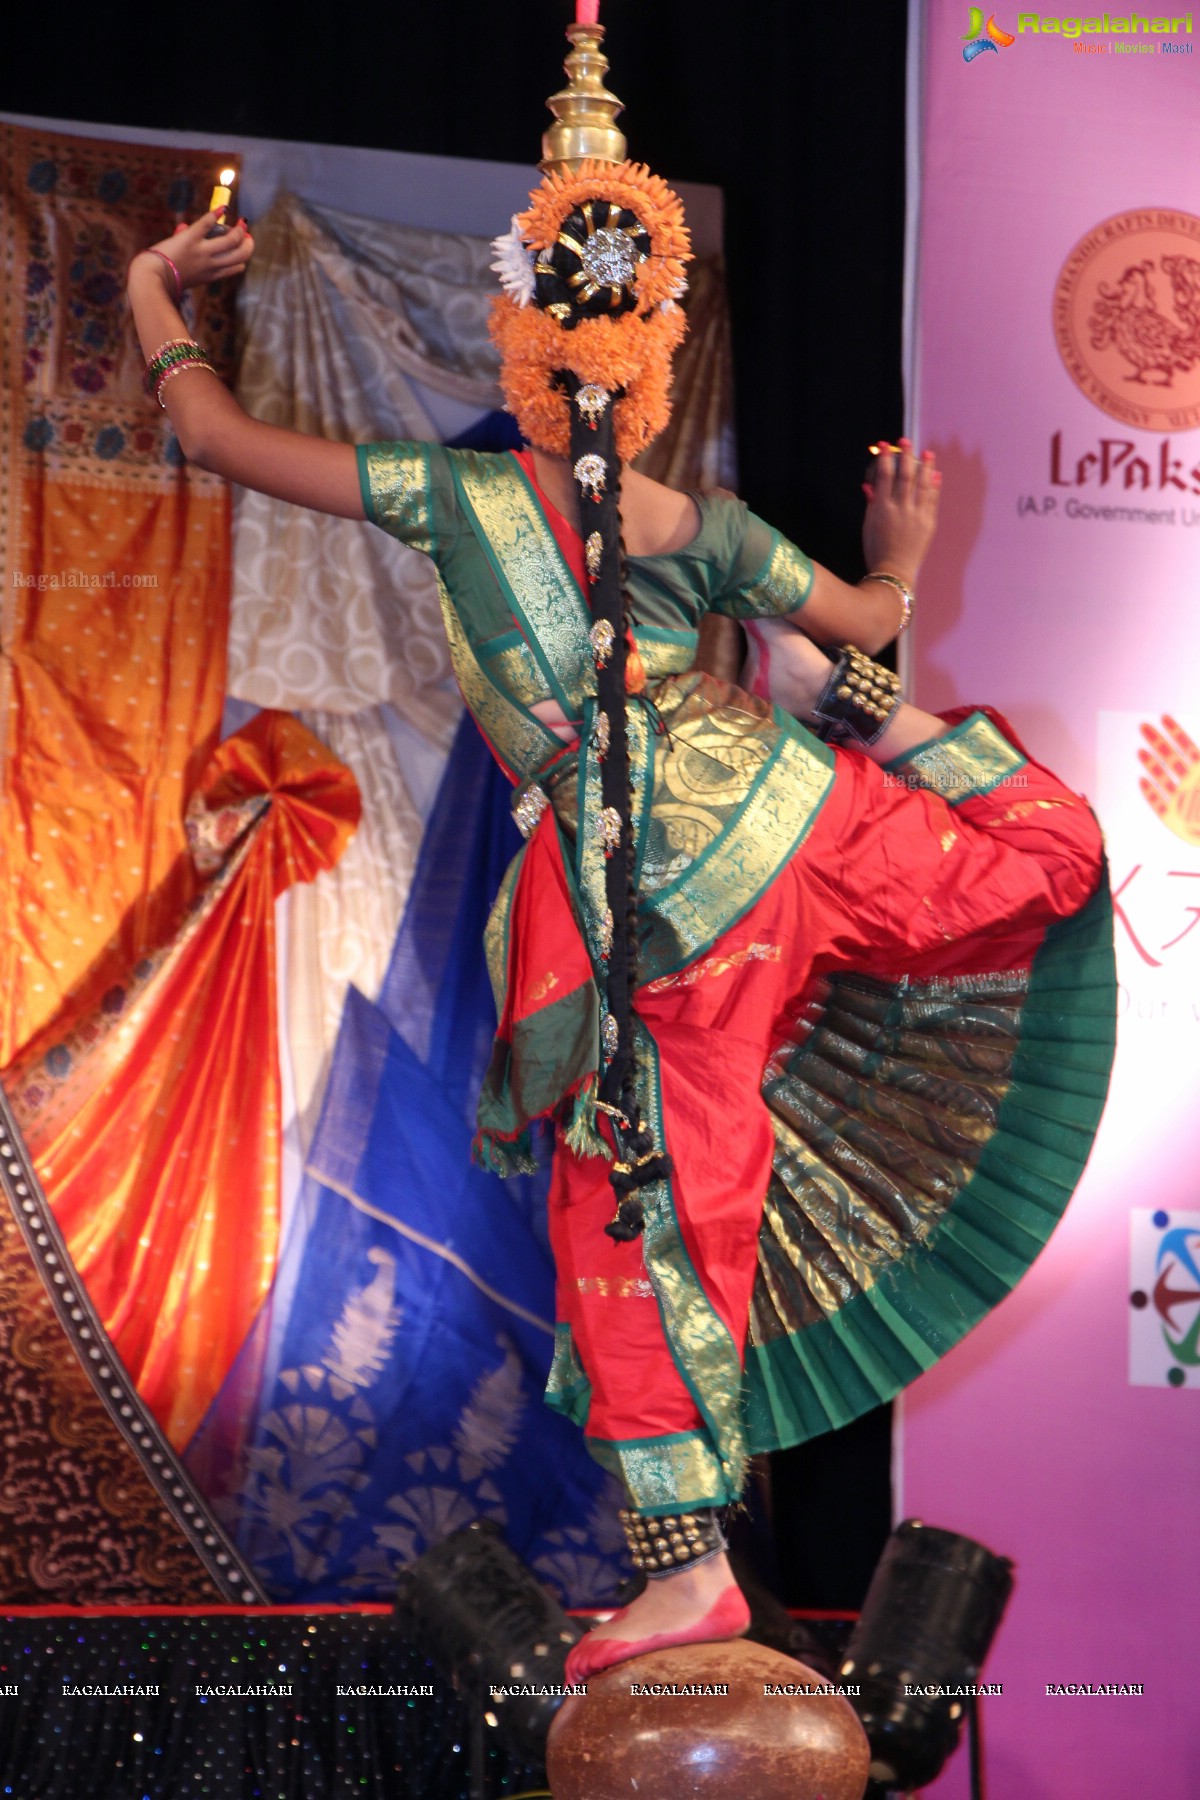 Srimathi Silk Mark 2014 Grand Finale, Hyderabad